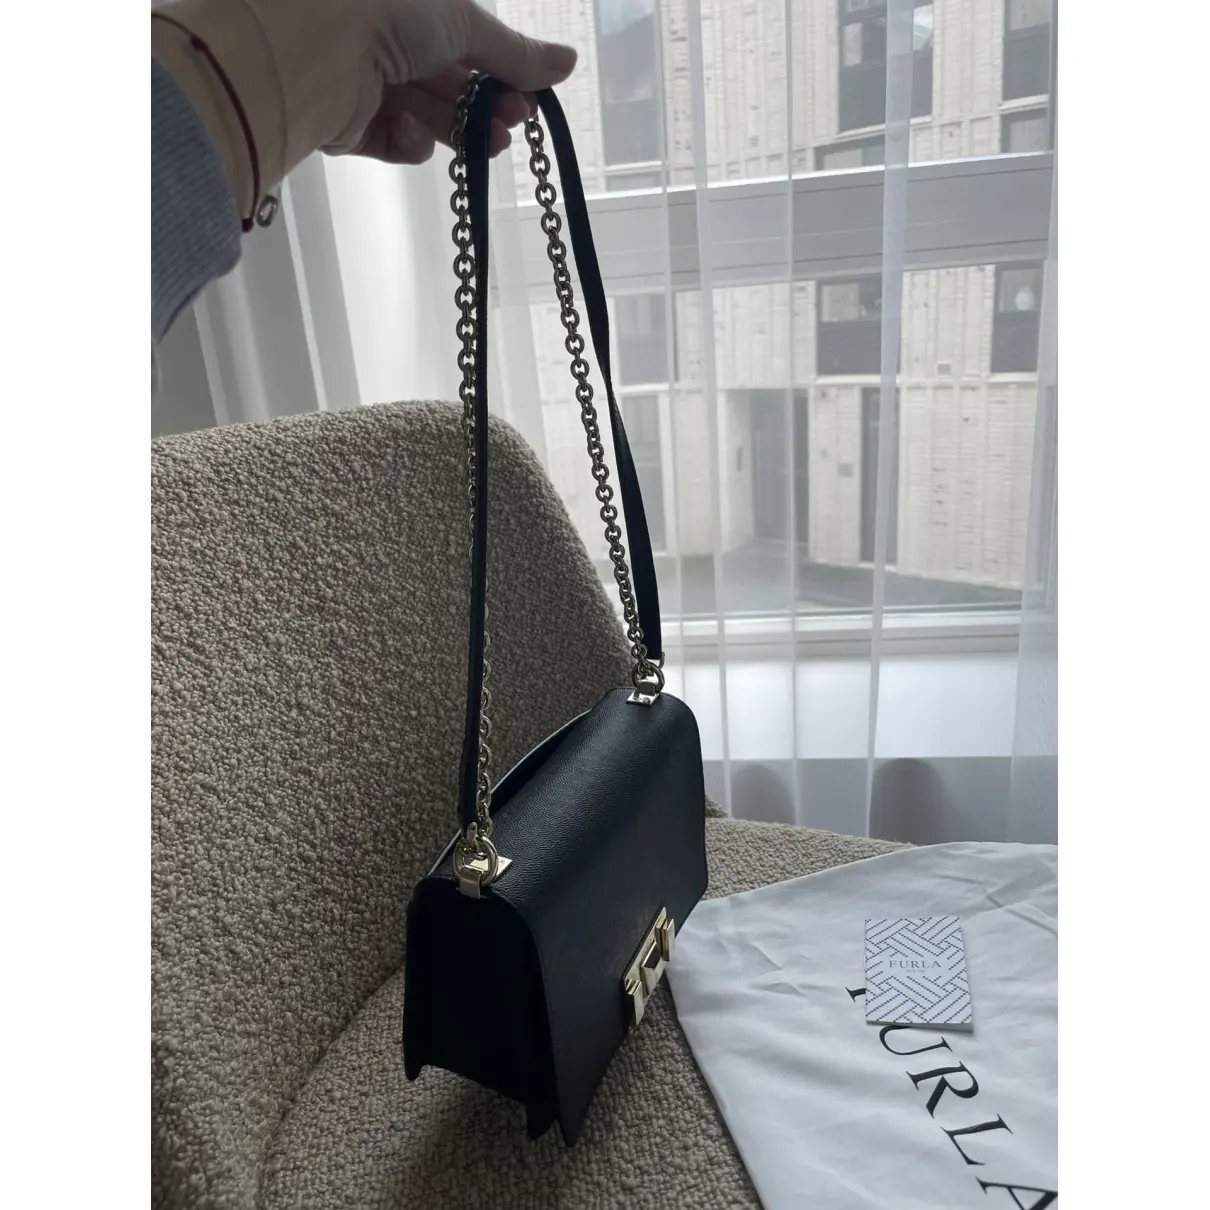 Buy Furla Leather crossbody bag online